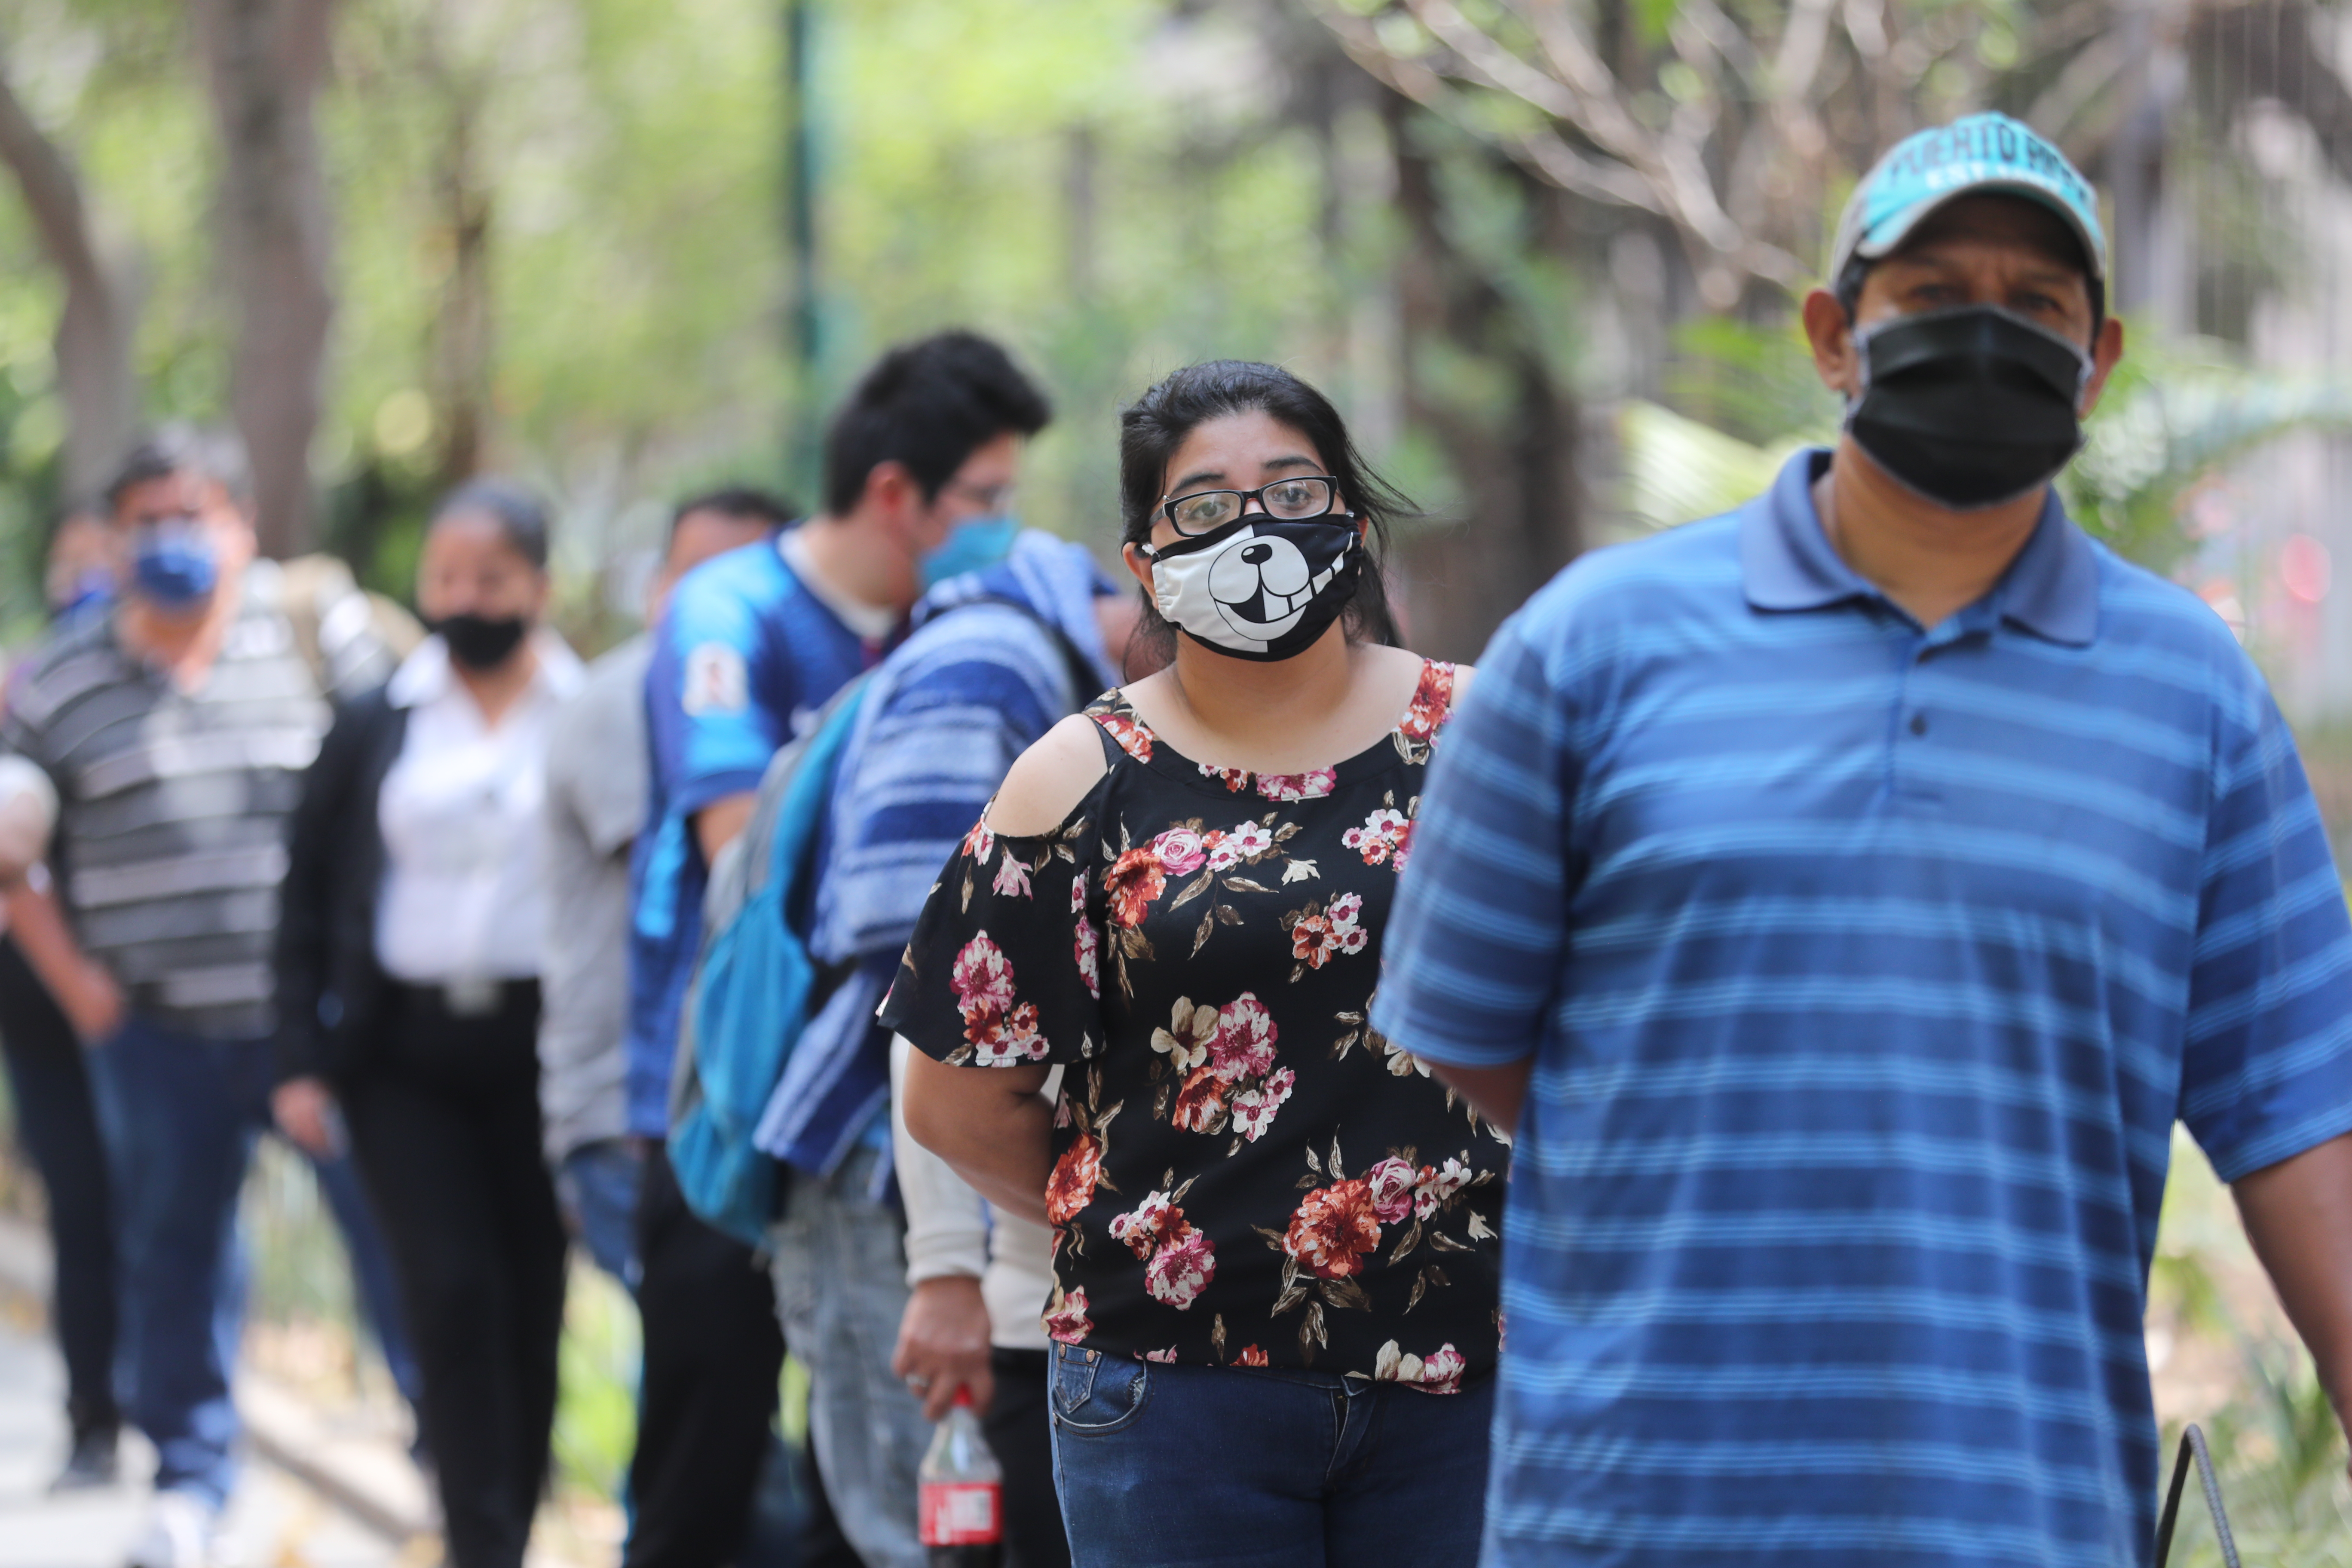 Guatemaltecos usan mascarilla obligatoriamente para prevenir contagios de coronavirus. (Foto Prensa Libre: Erick Avila)